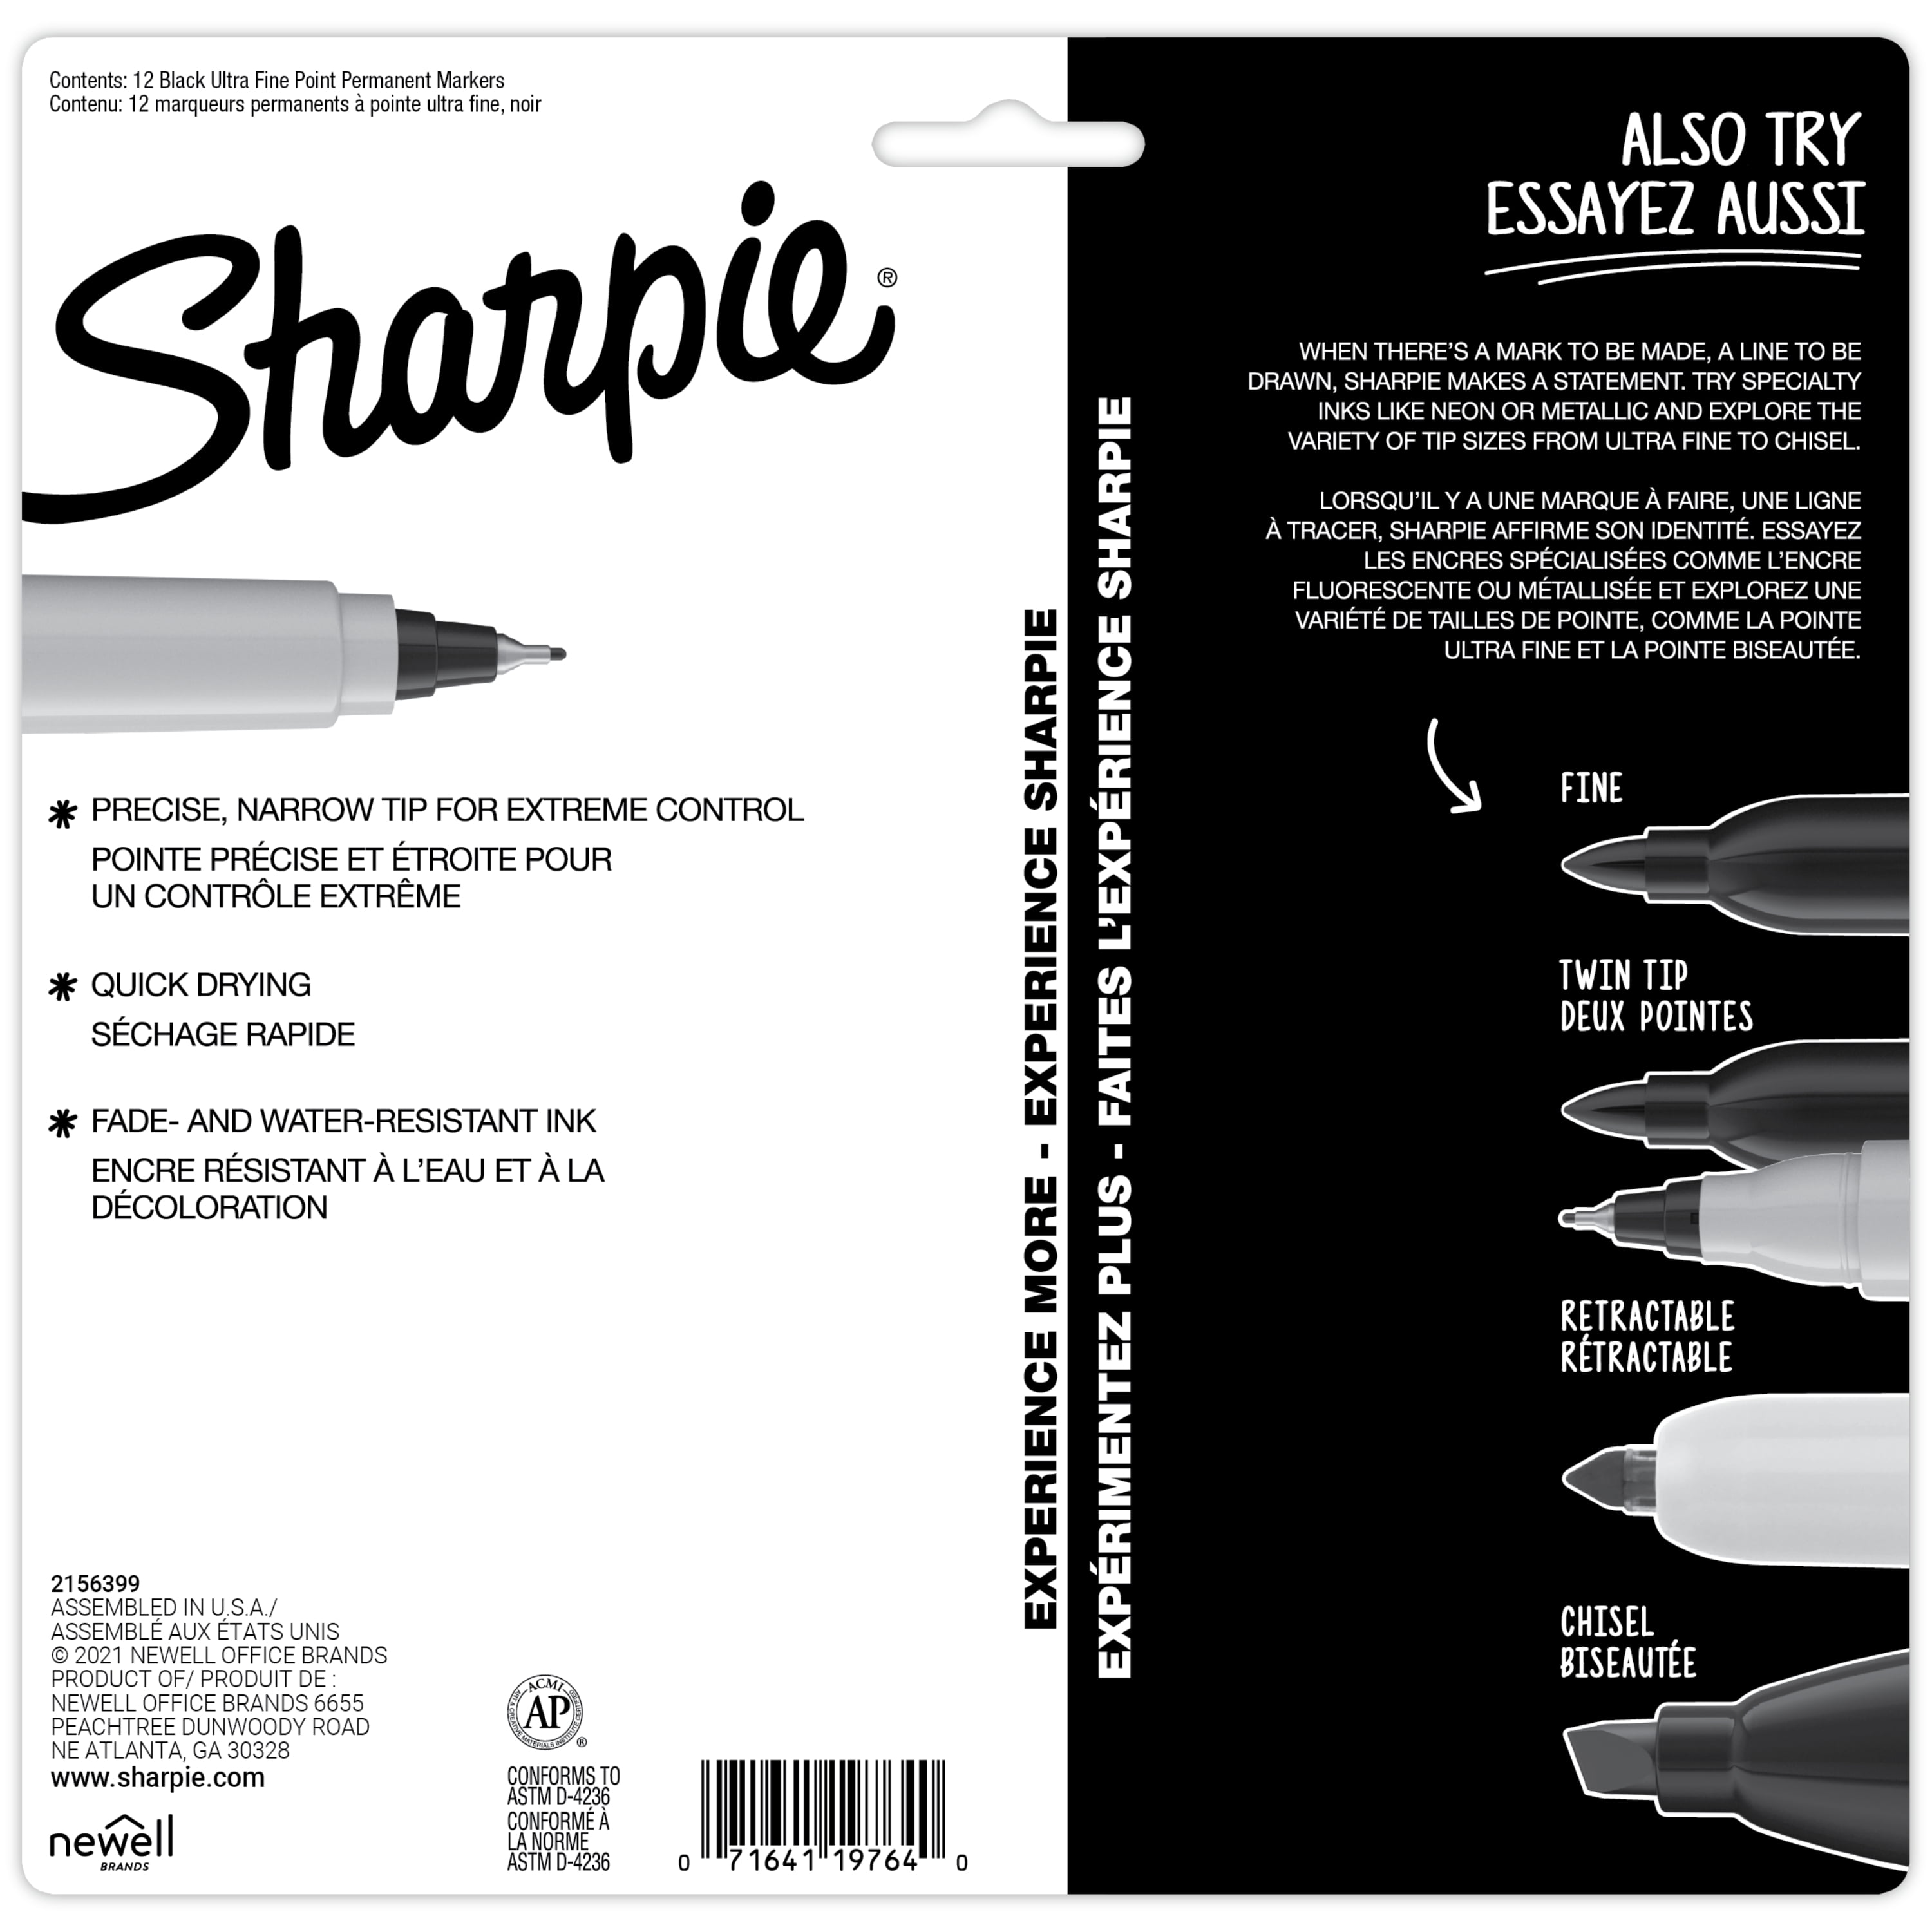 Sharpie Extra Fine Point Permanent Marker (Black) GSN351C B&H